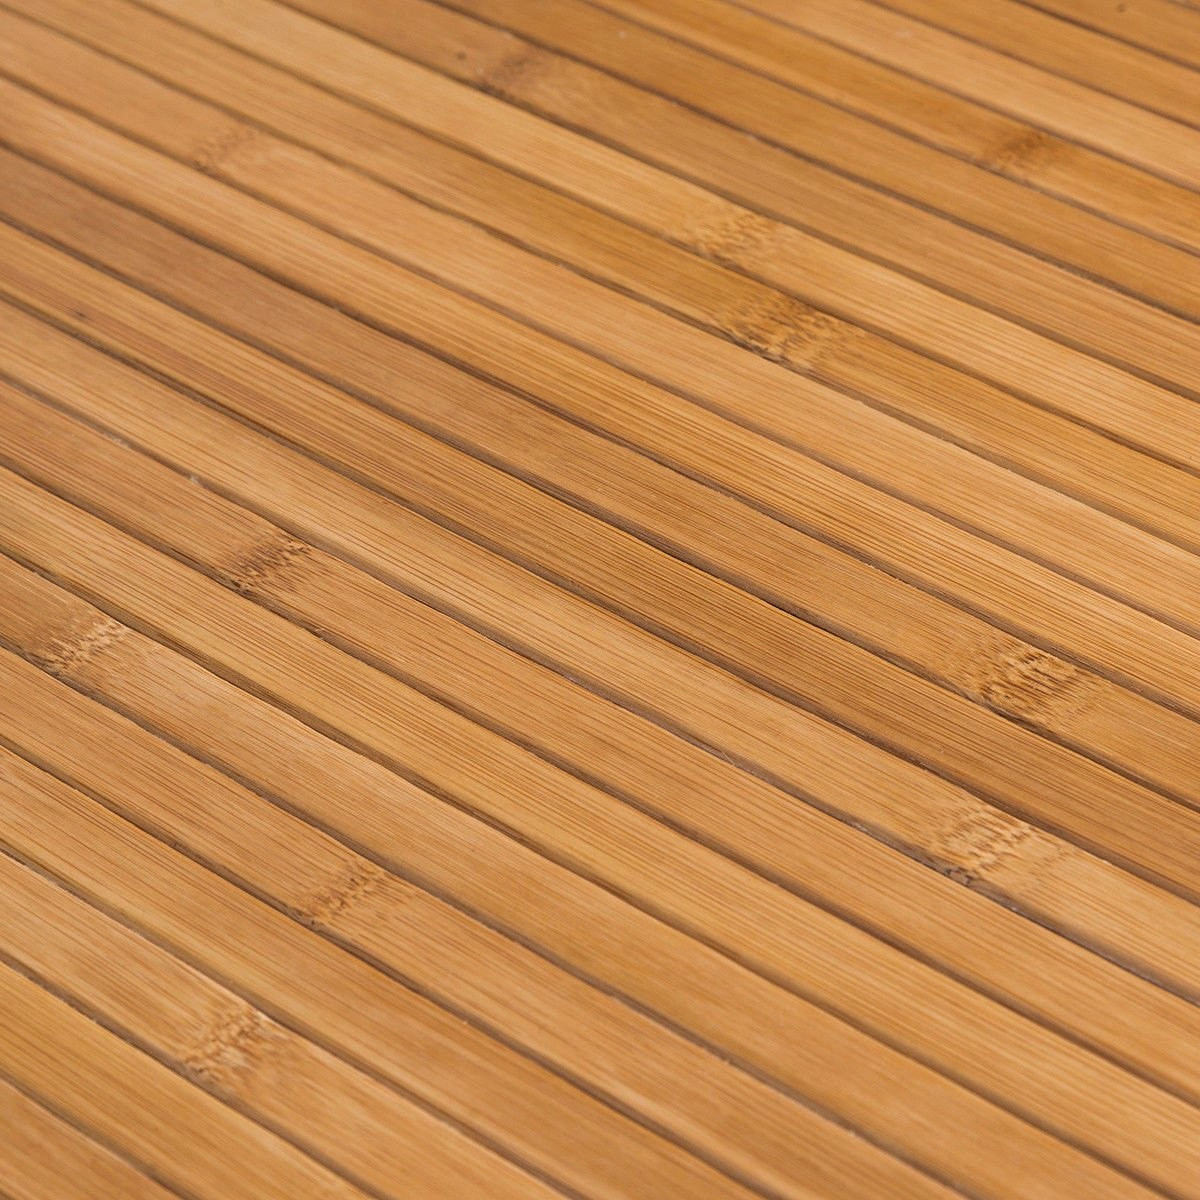 24 Wonderful Staining Hardwood Floors How to | Unique Flooring Ideas